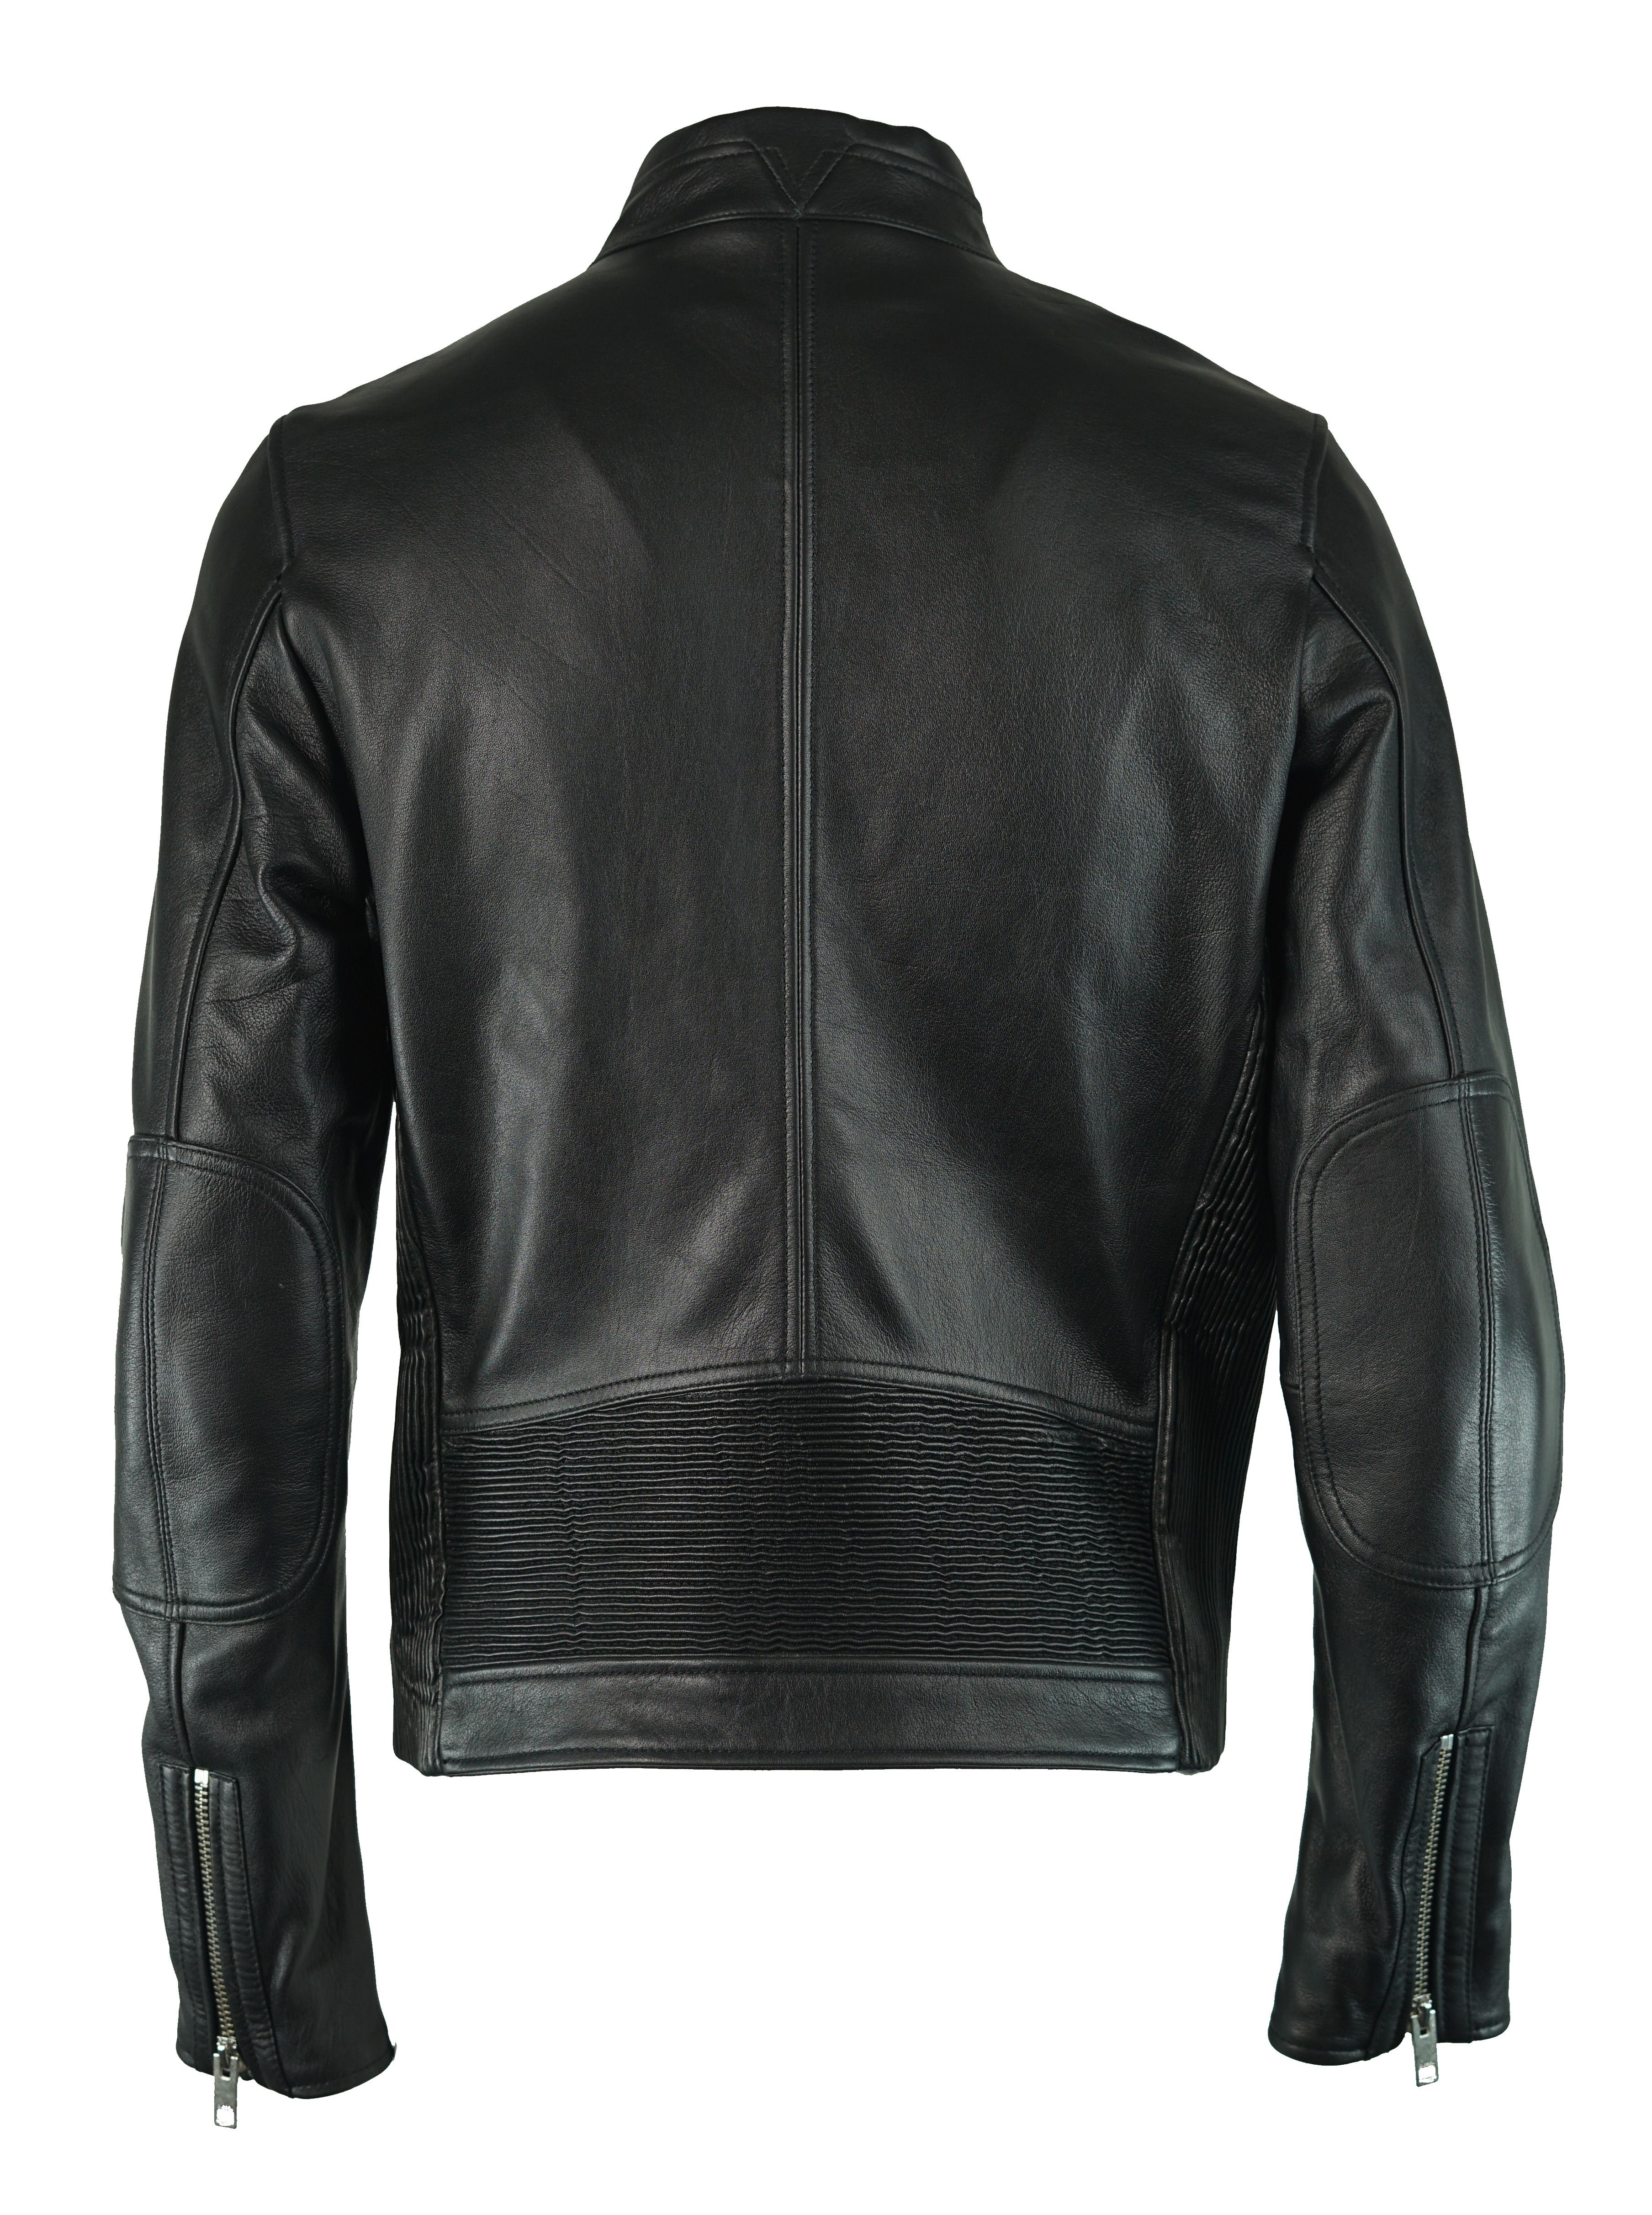 Diesel L-Rush 900 Leather Jacket. 100% Lamb Skin leather. Zip Closure With Flap Cover. Mandarin Collar. Zip Fasten Pockets. Diesel Black Leather Jacket